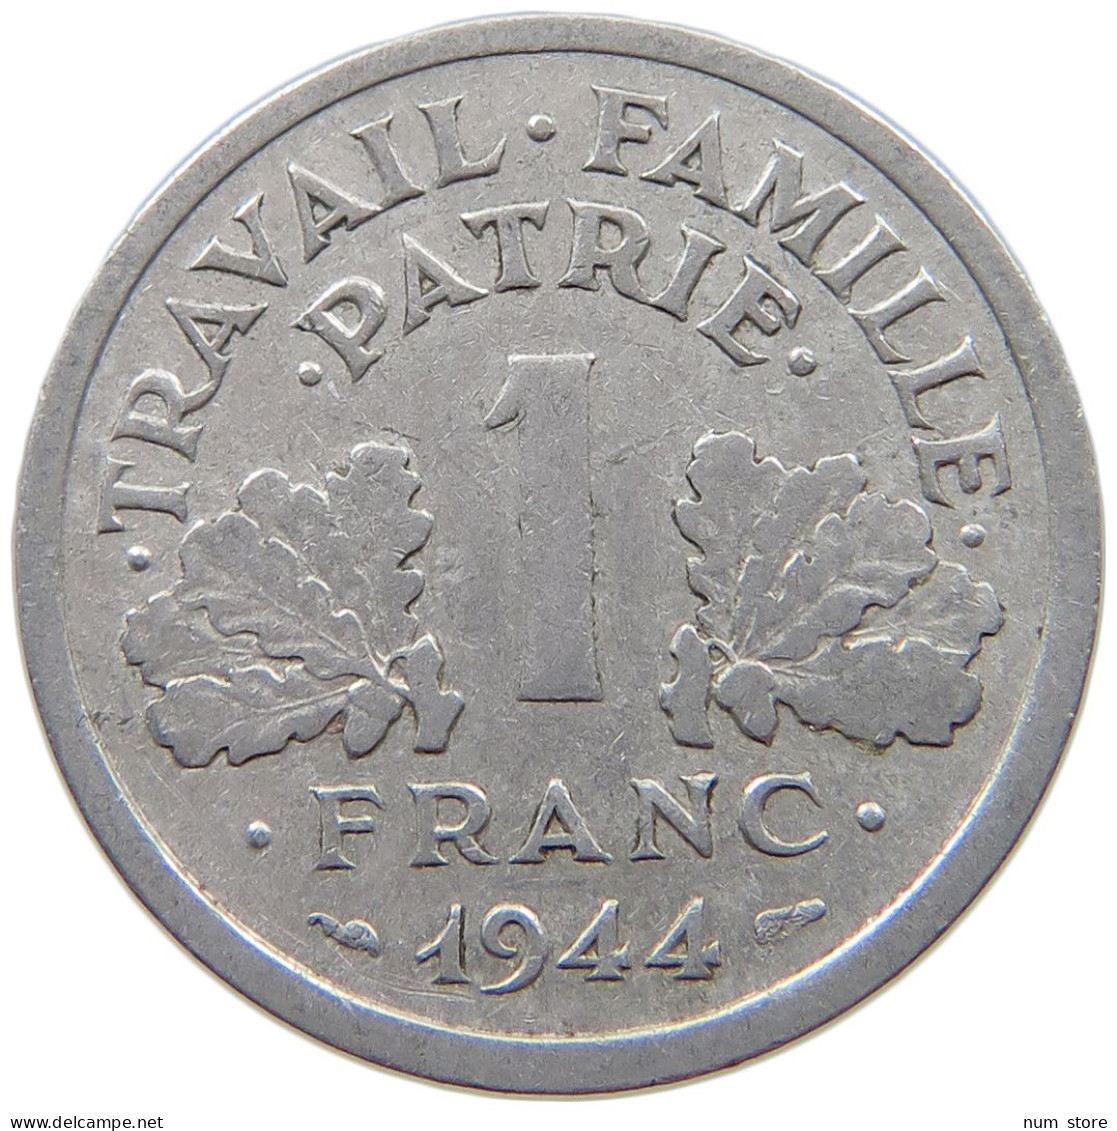 FRANCE 1 FRANC 1944 C #s068 0555 - 1 Franc